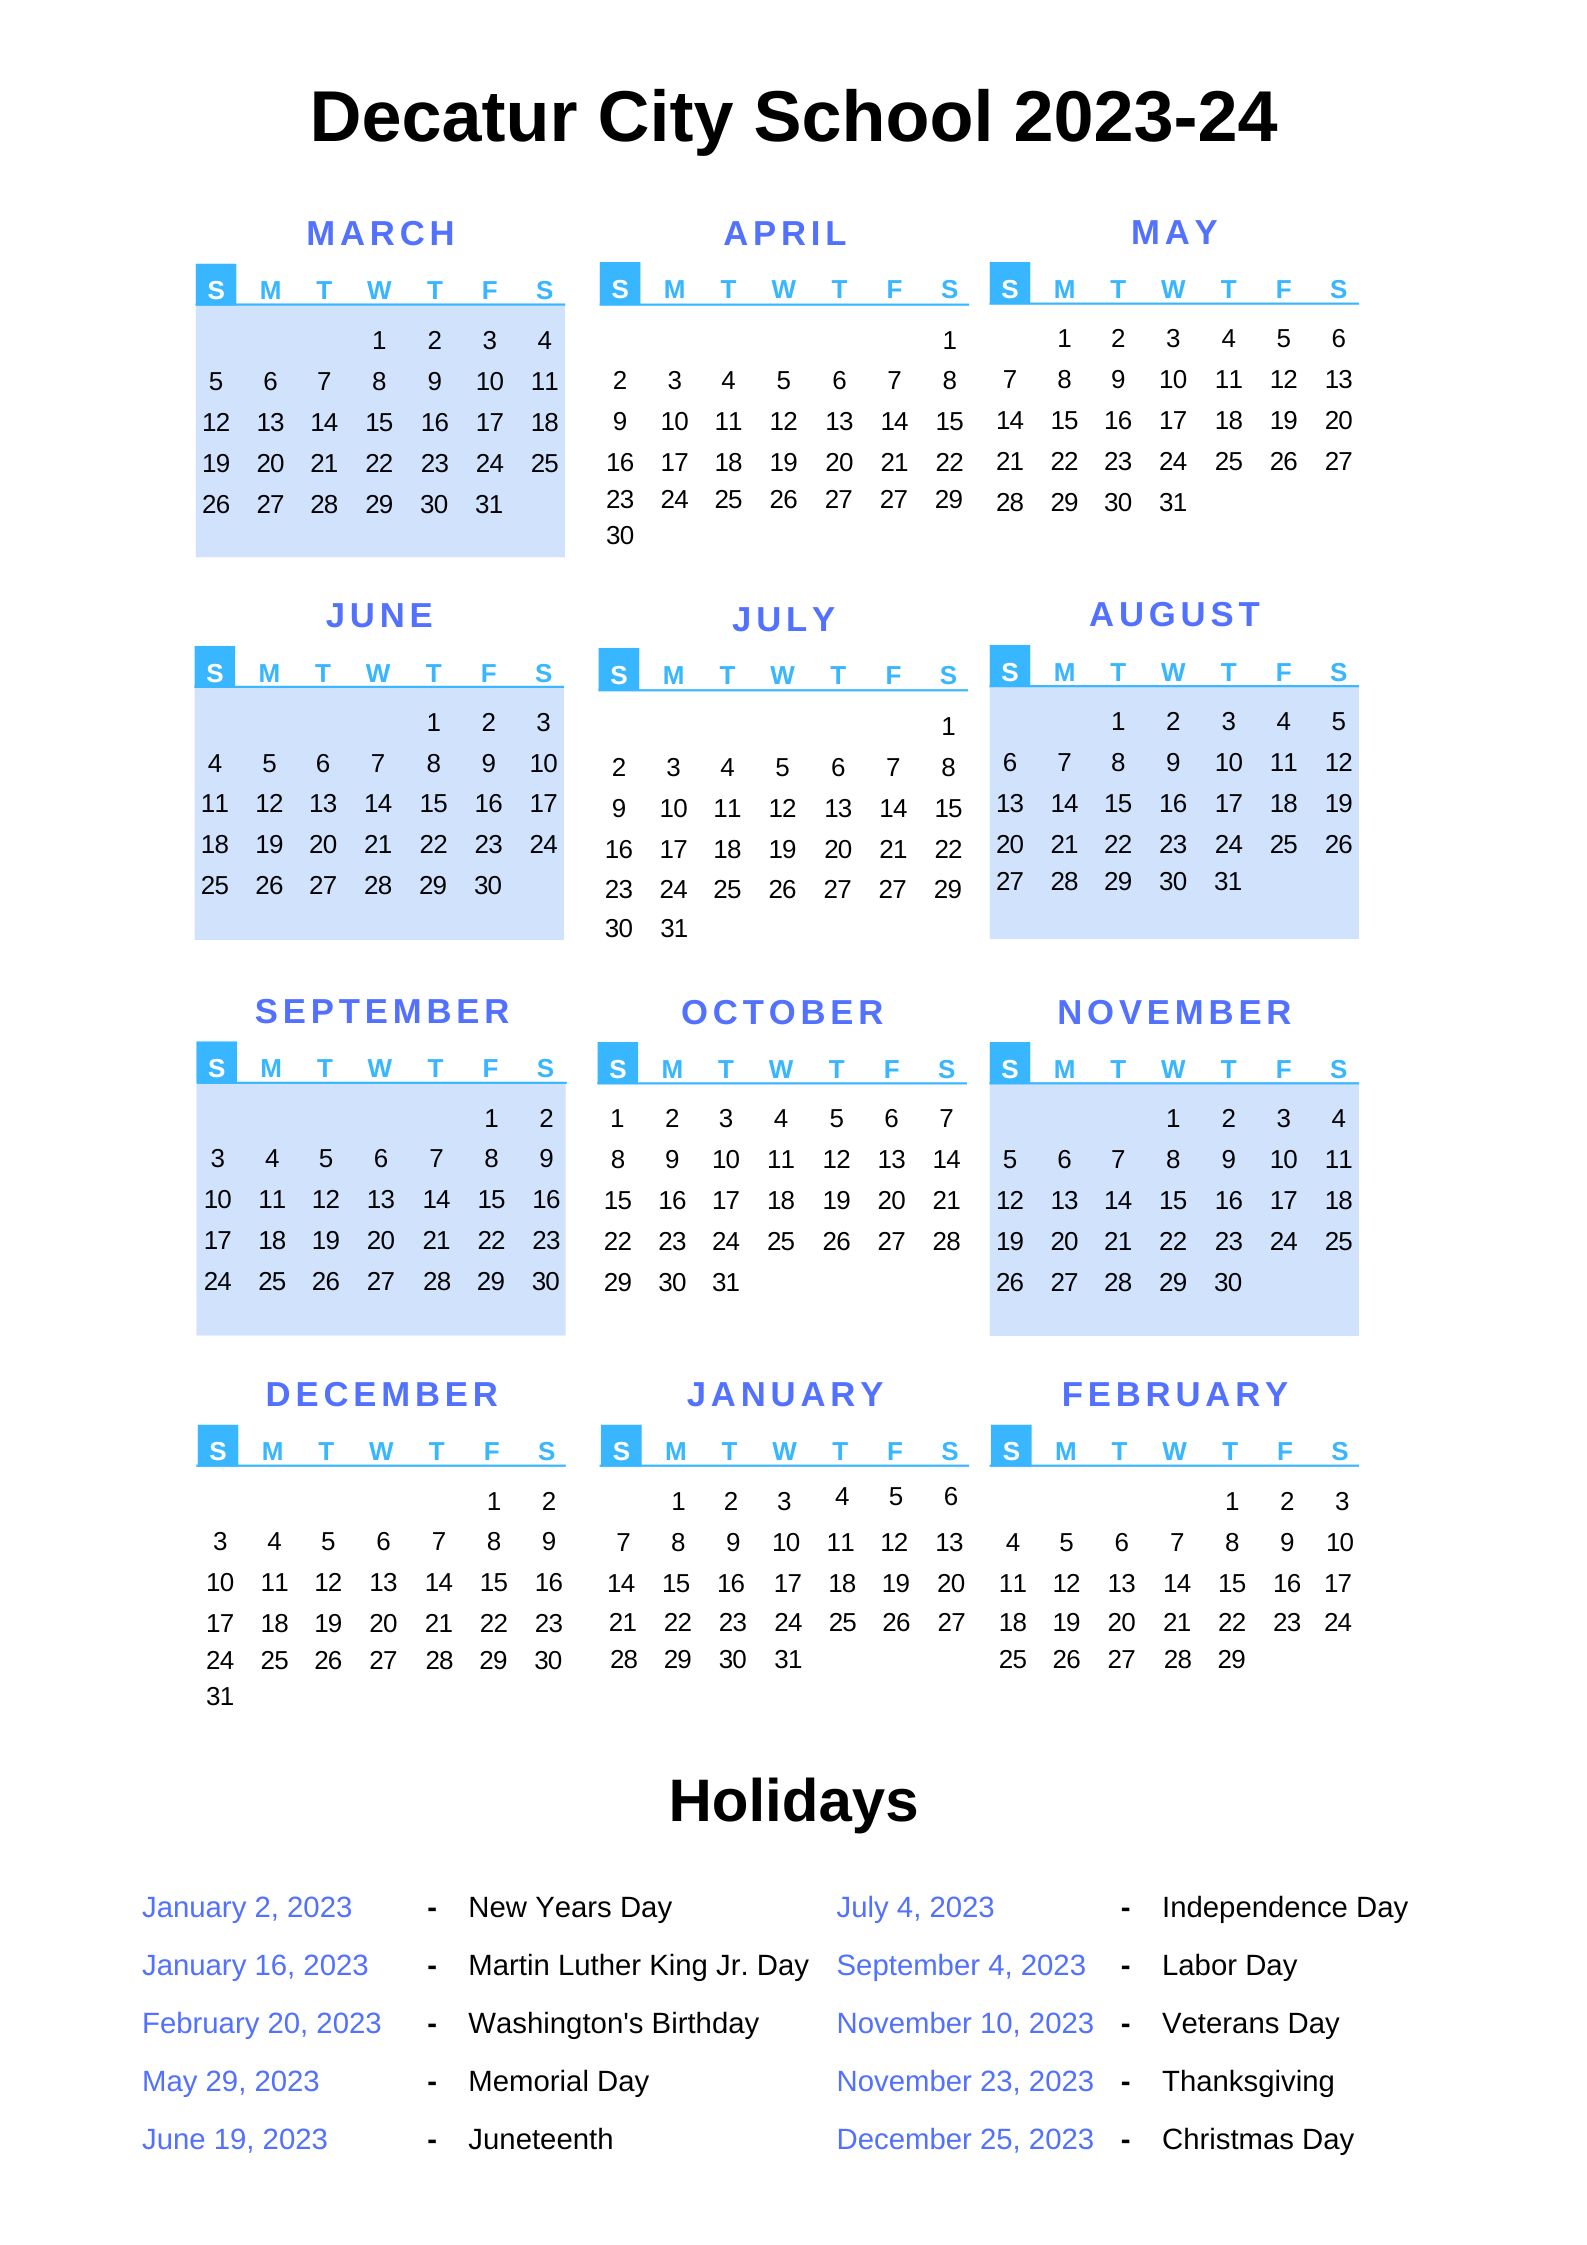 Decatur City Schools Calendar 202324 With Holidays